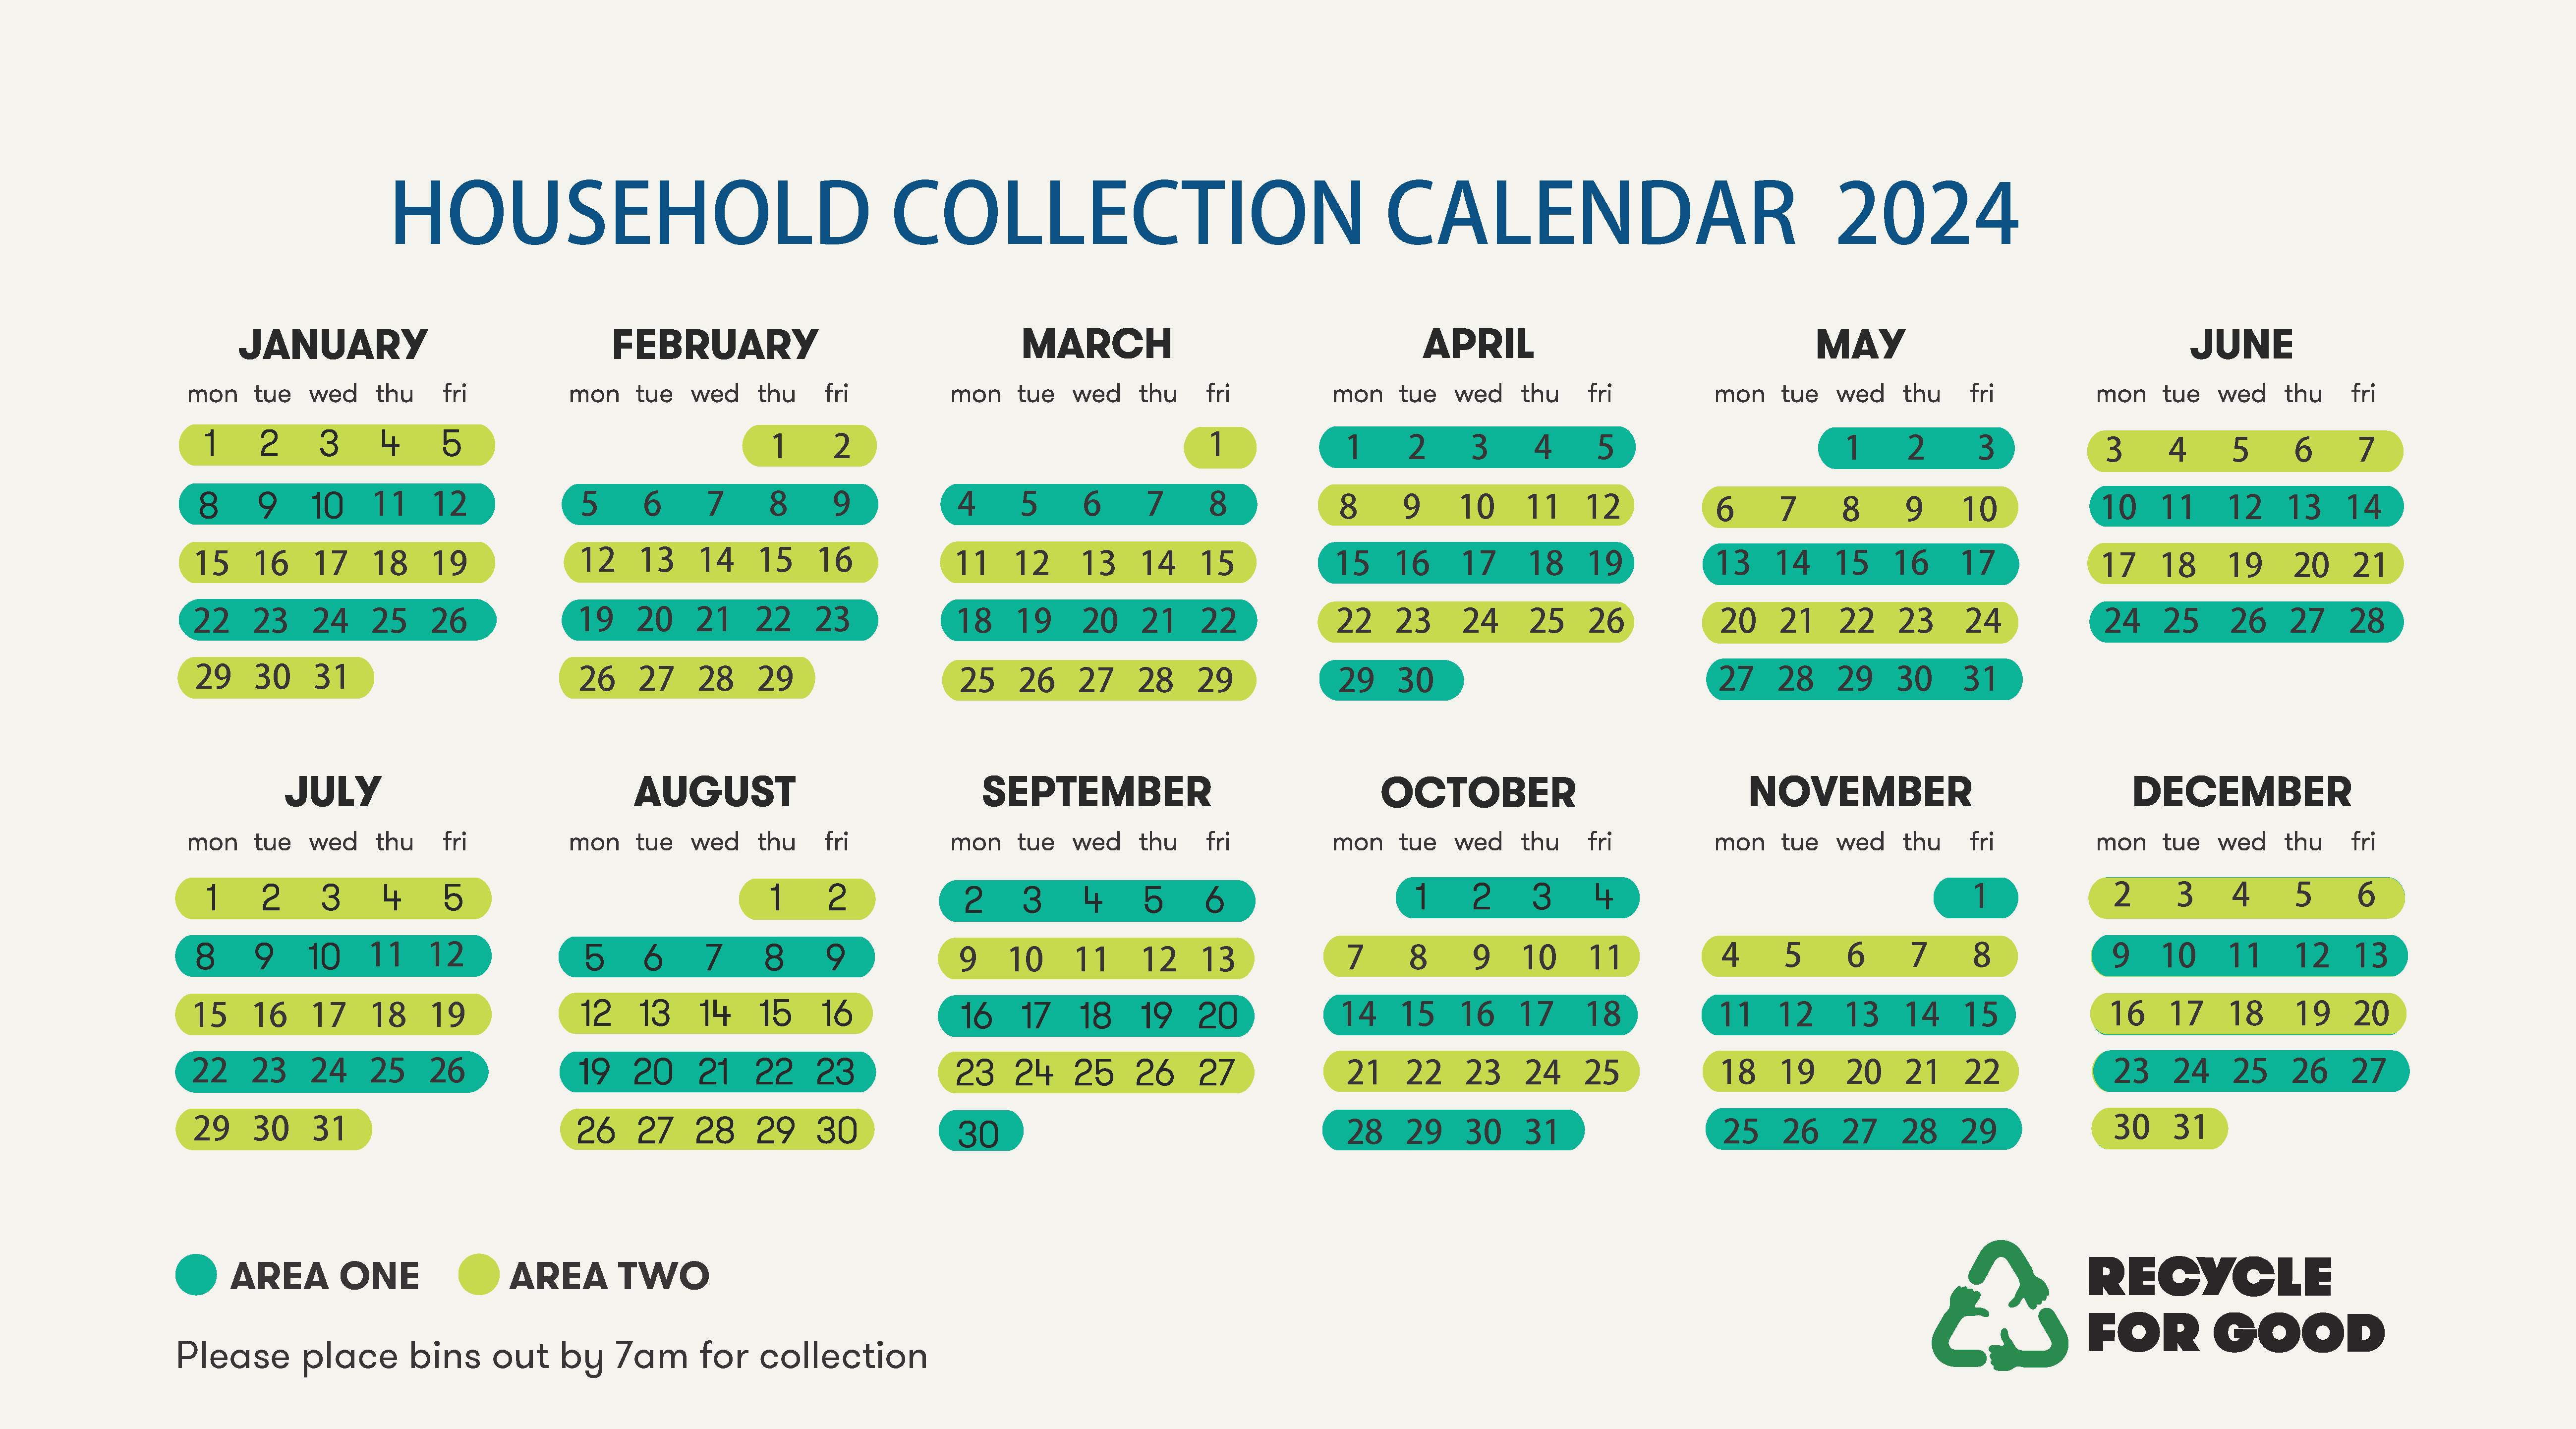 Household waste collection calendar 